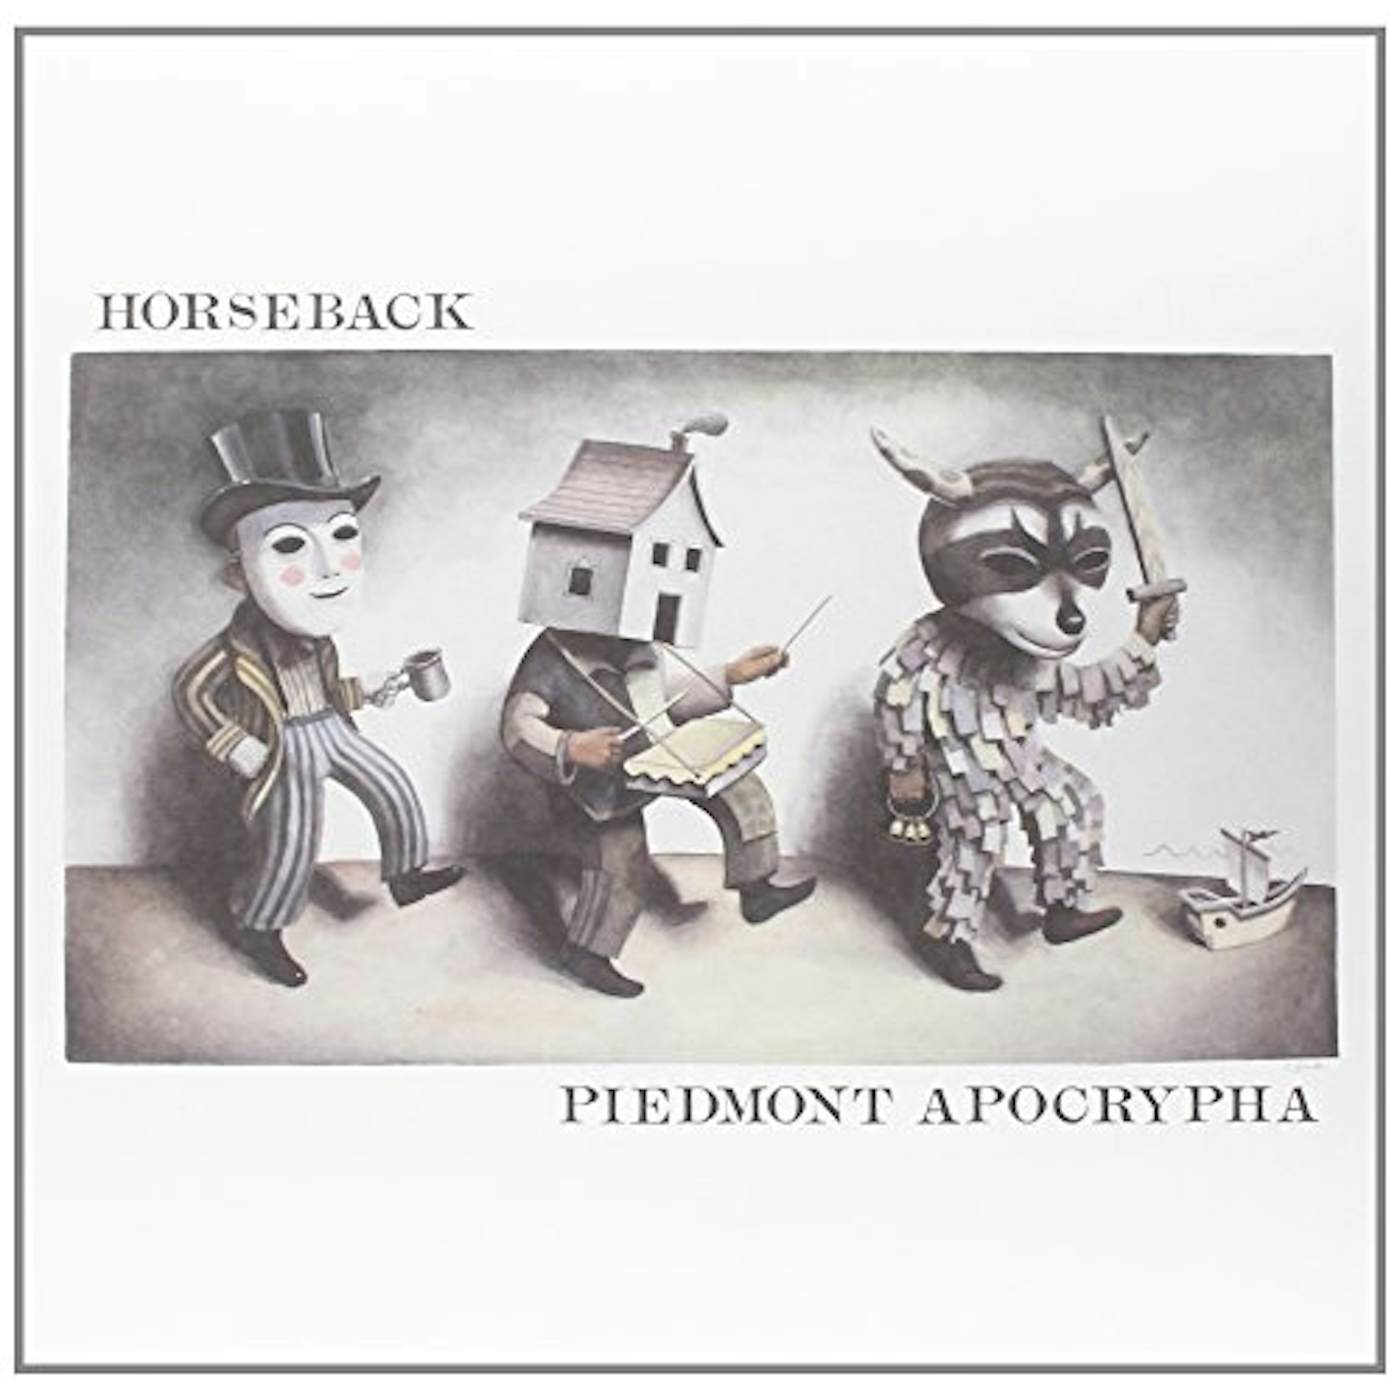 Horseback Piedmont Apocrypha Vinyl Record